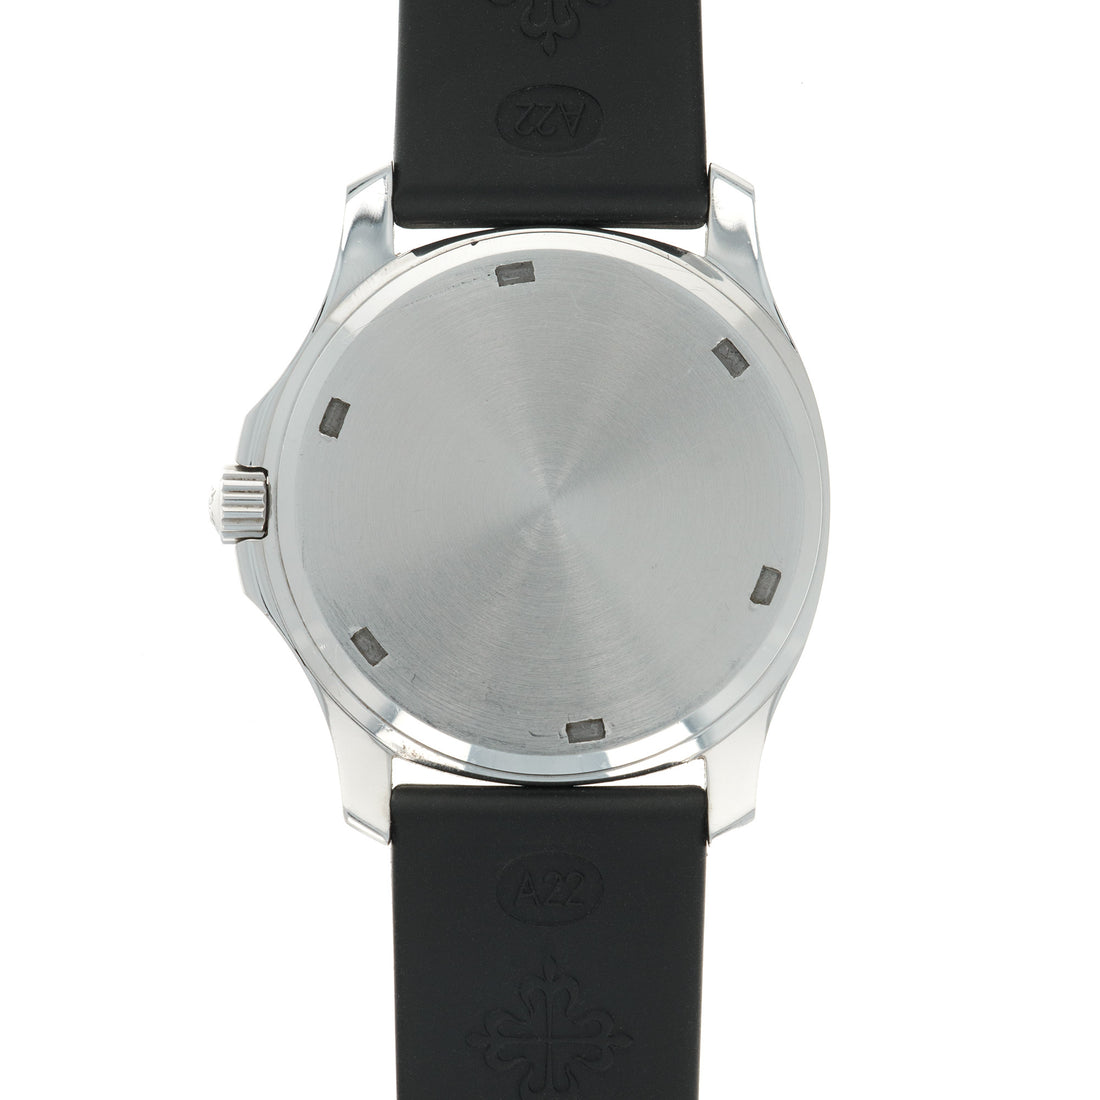 Patek Philippe Aquanaut Automatic Watch Ref. 5060, First Series Aquanaut